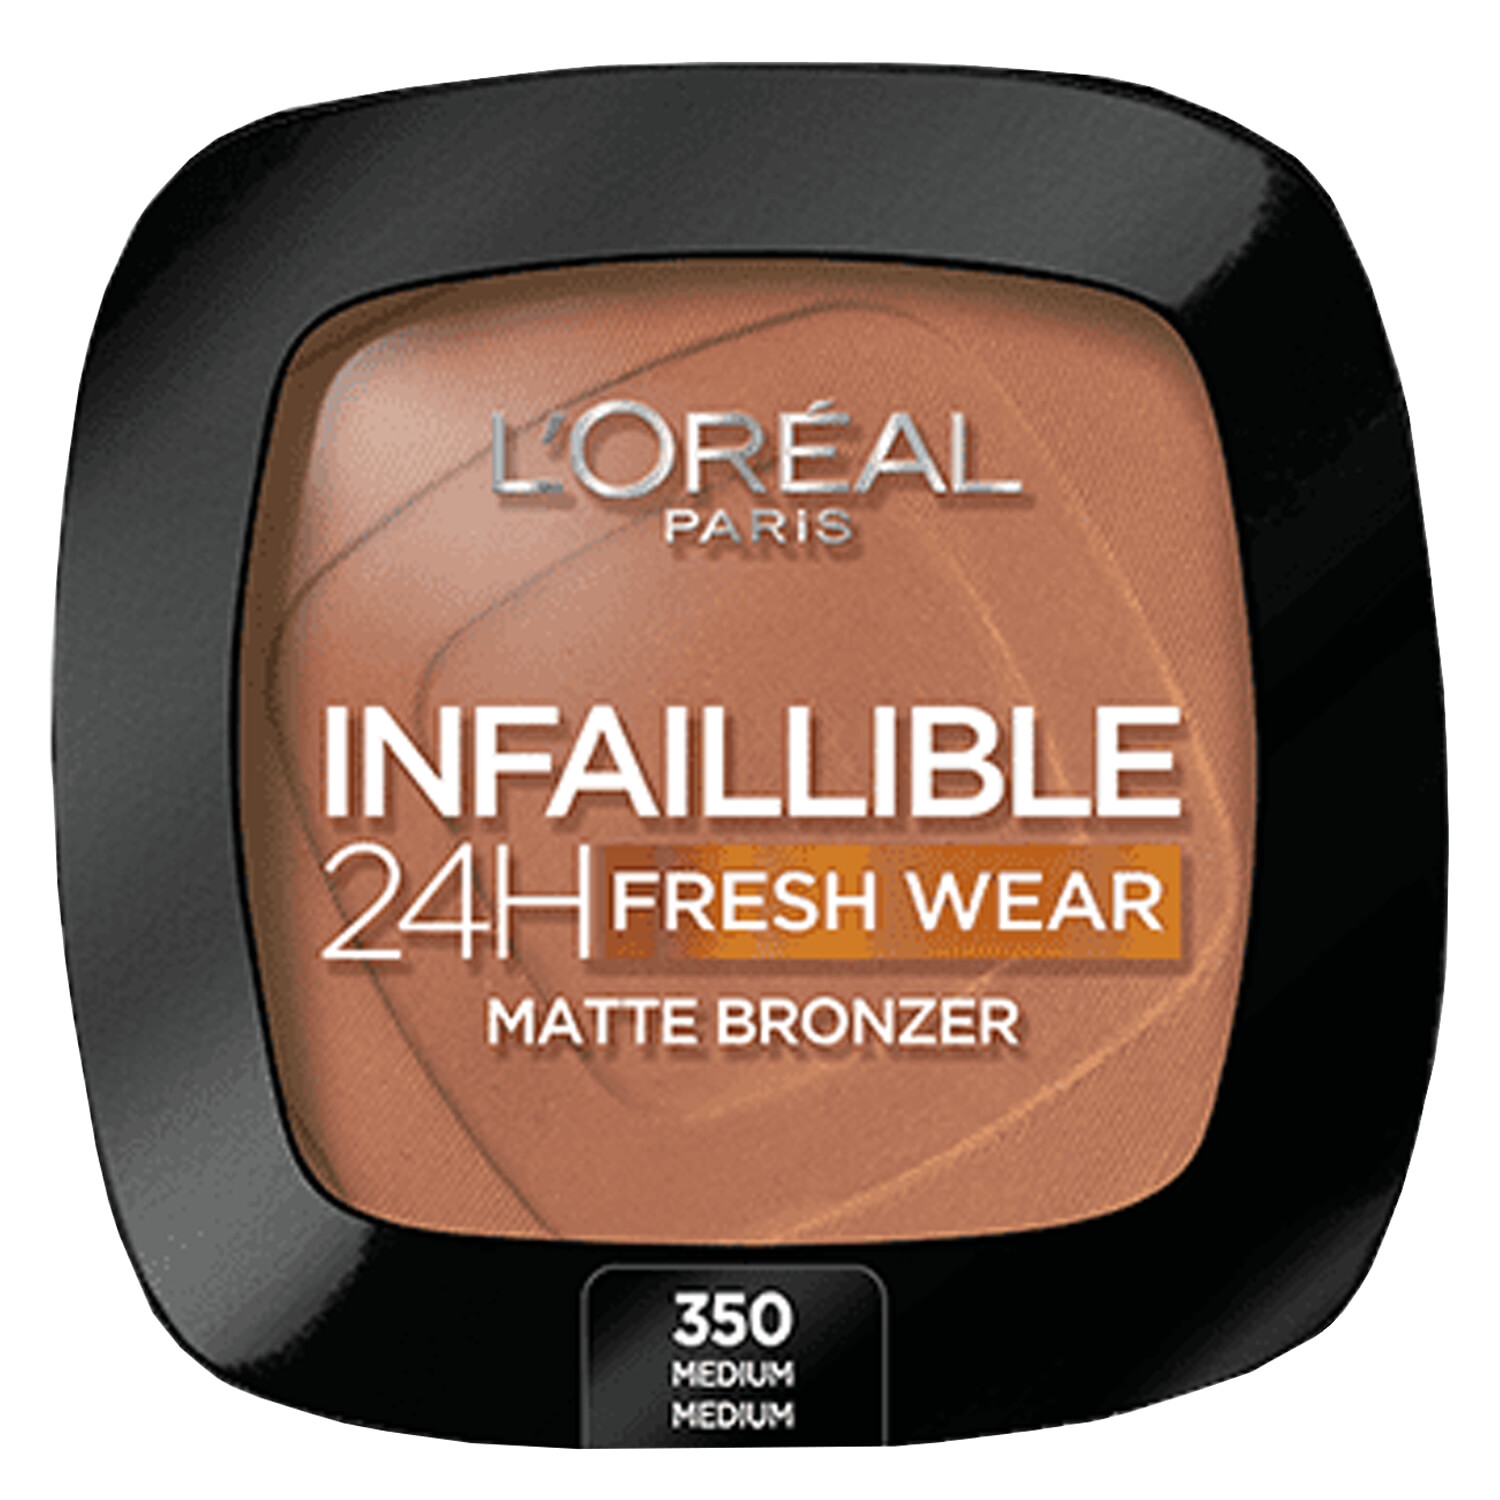 Product image from LOréal Infaillible - 24H Fresh Wear Matte Bronzer 350 Medium